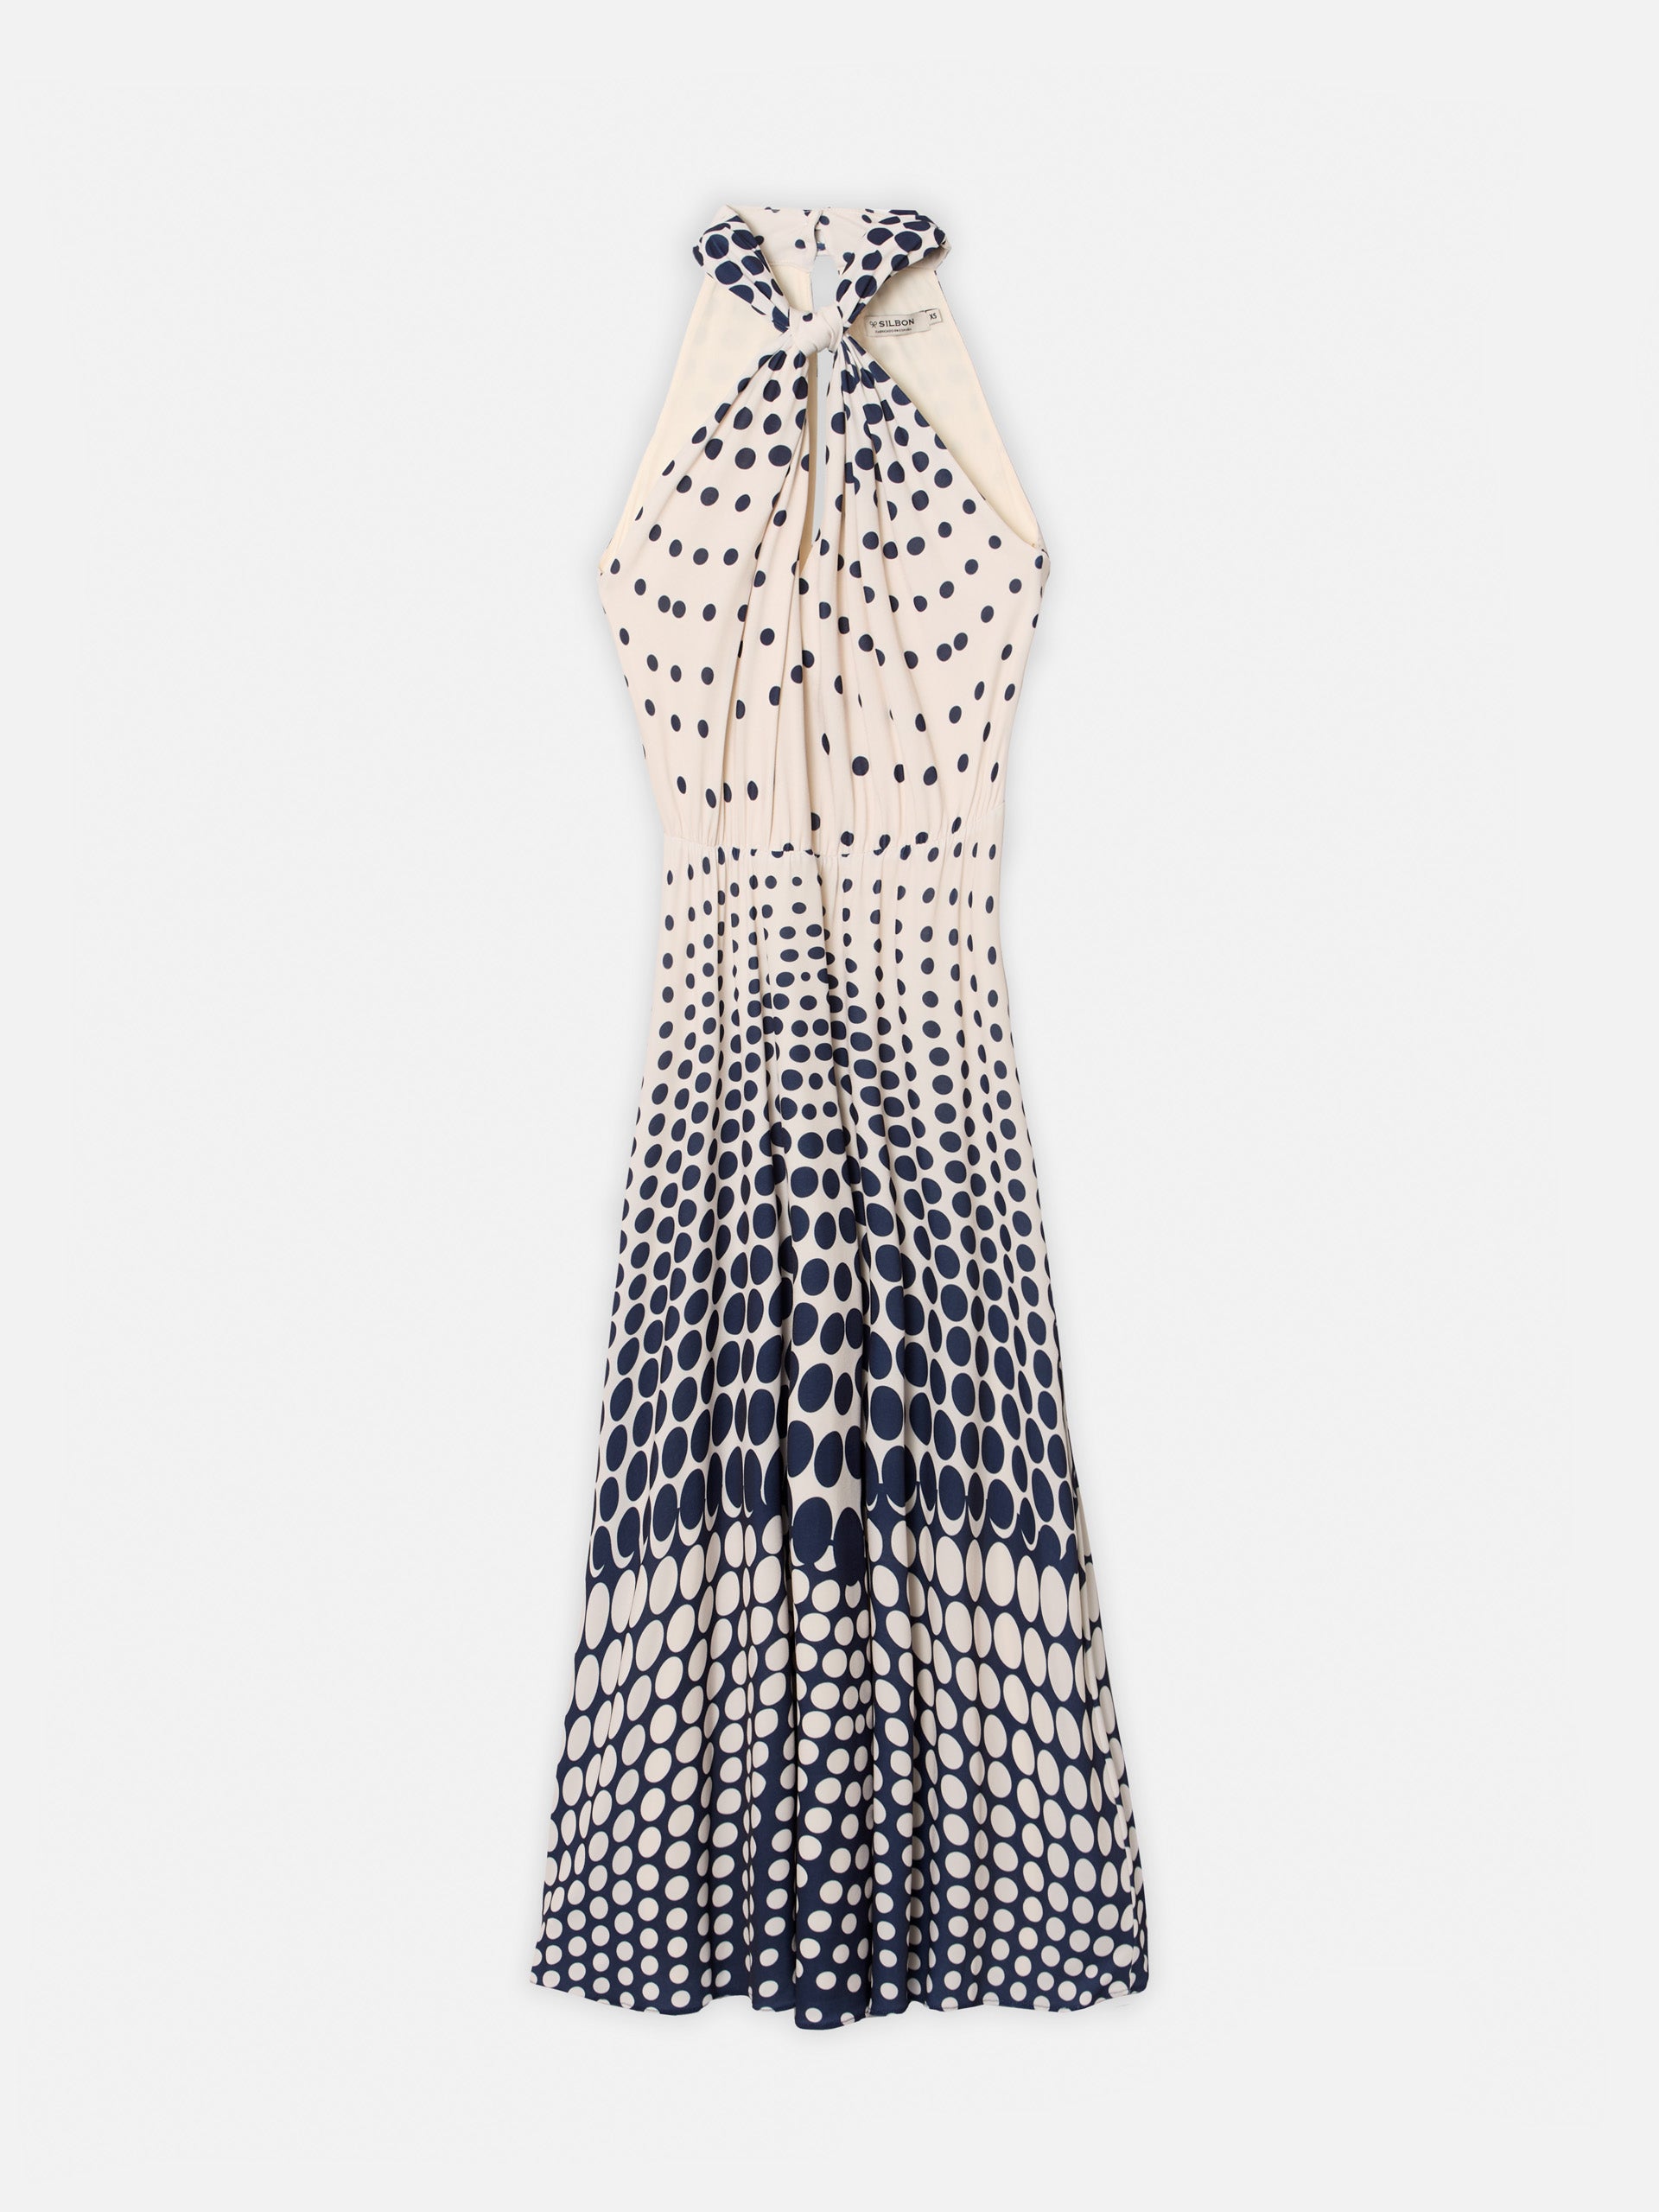 Long navy blue polka dot knit dress